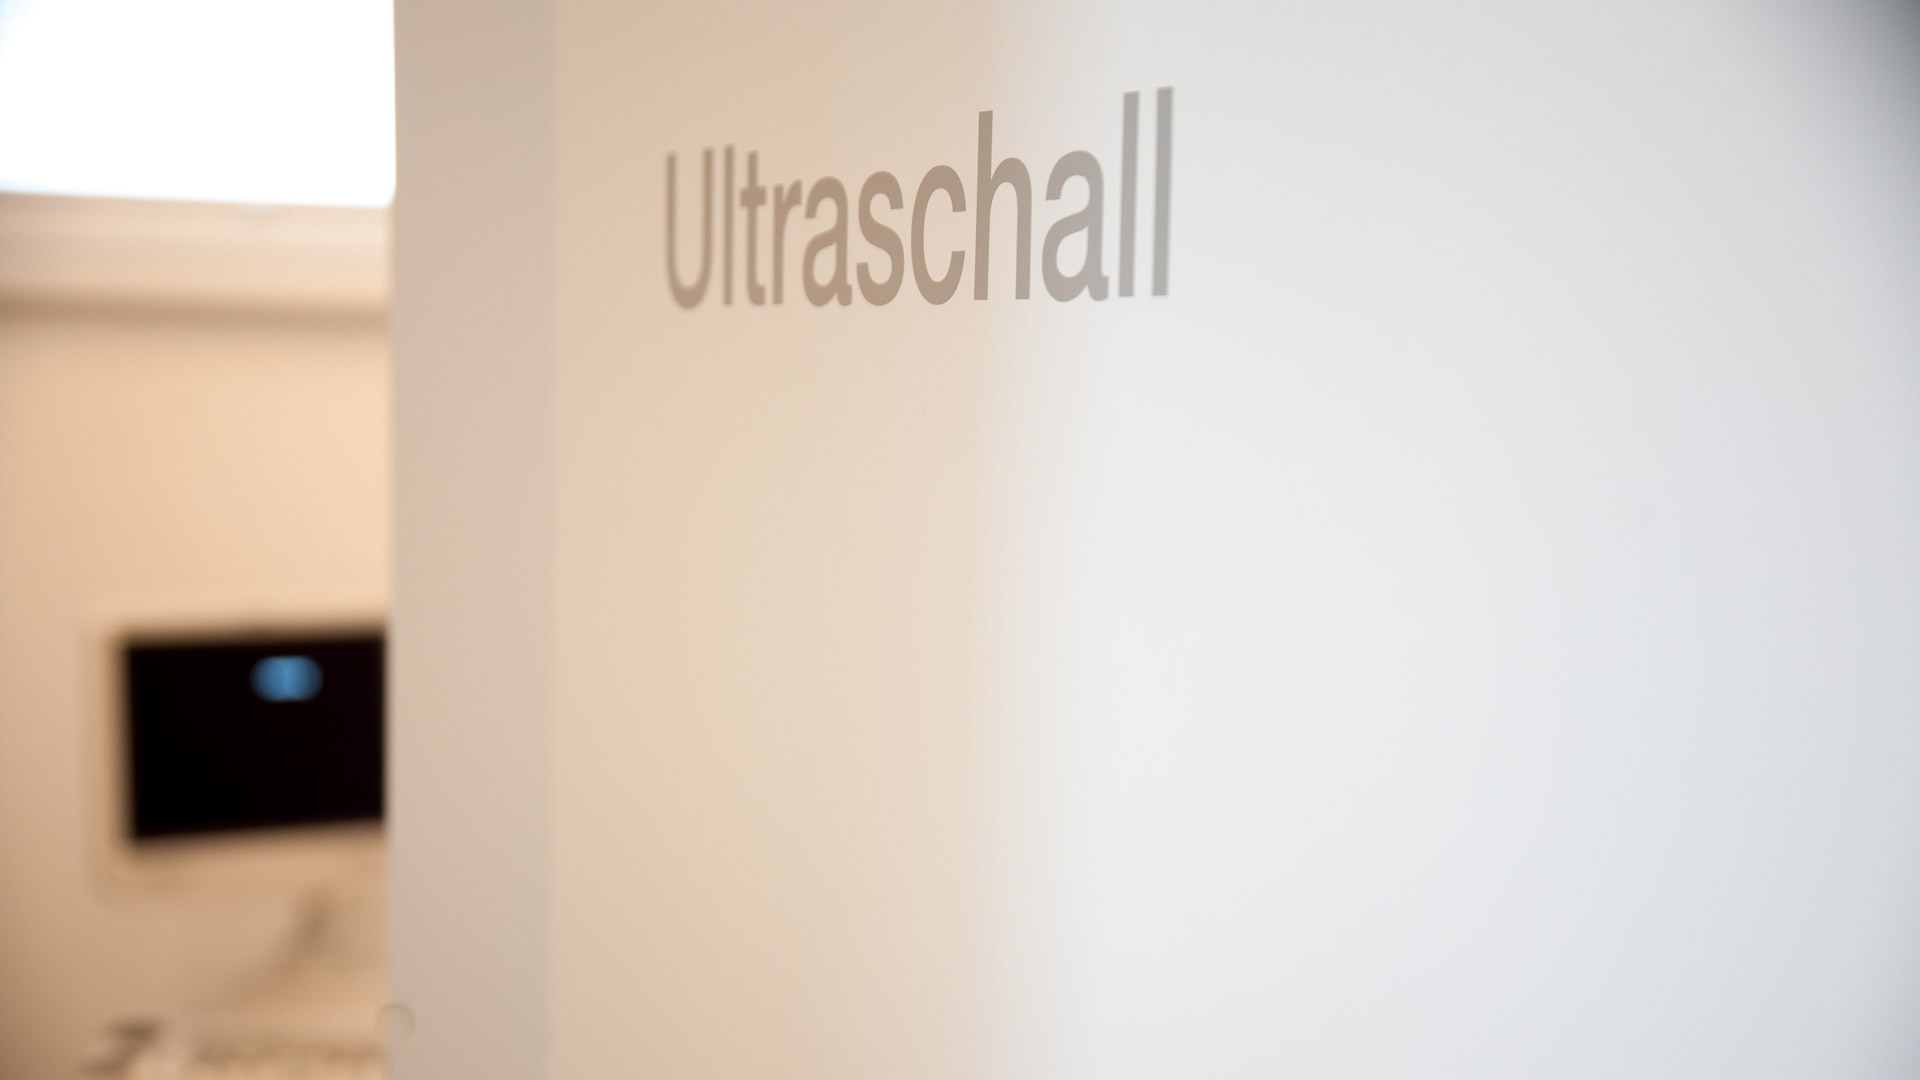 Praxis_Ultrasachall